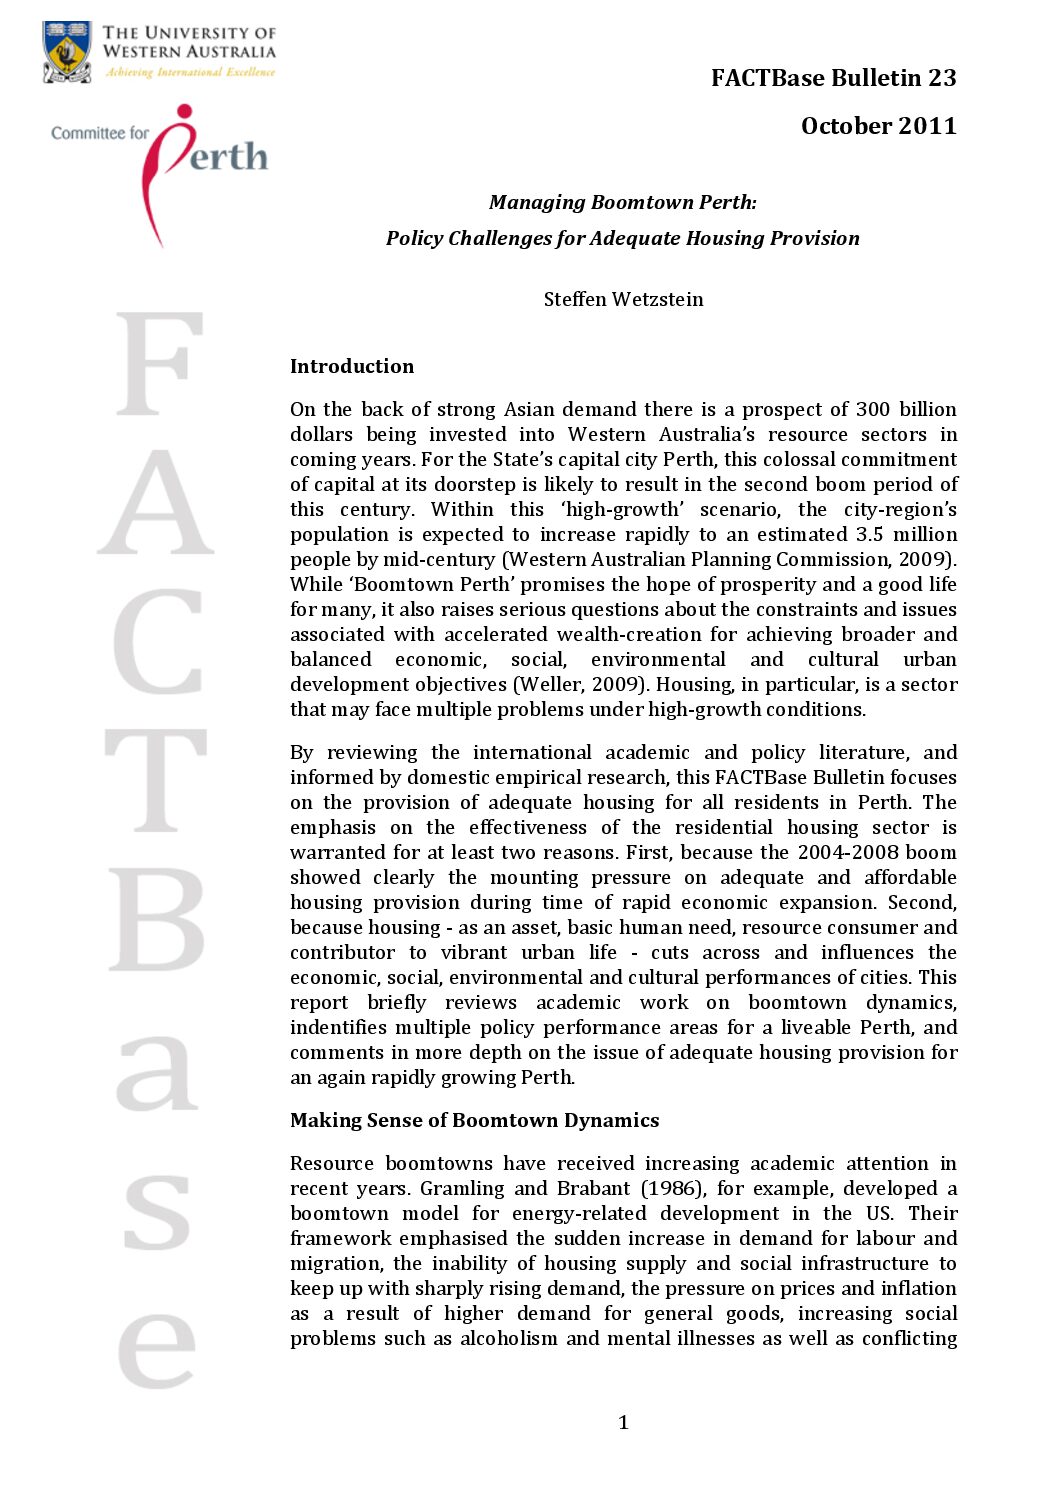 FACTBase Bulletin 23 - November 2011